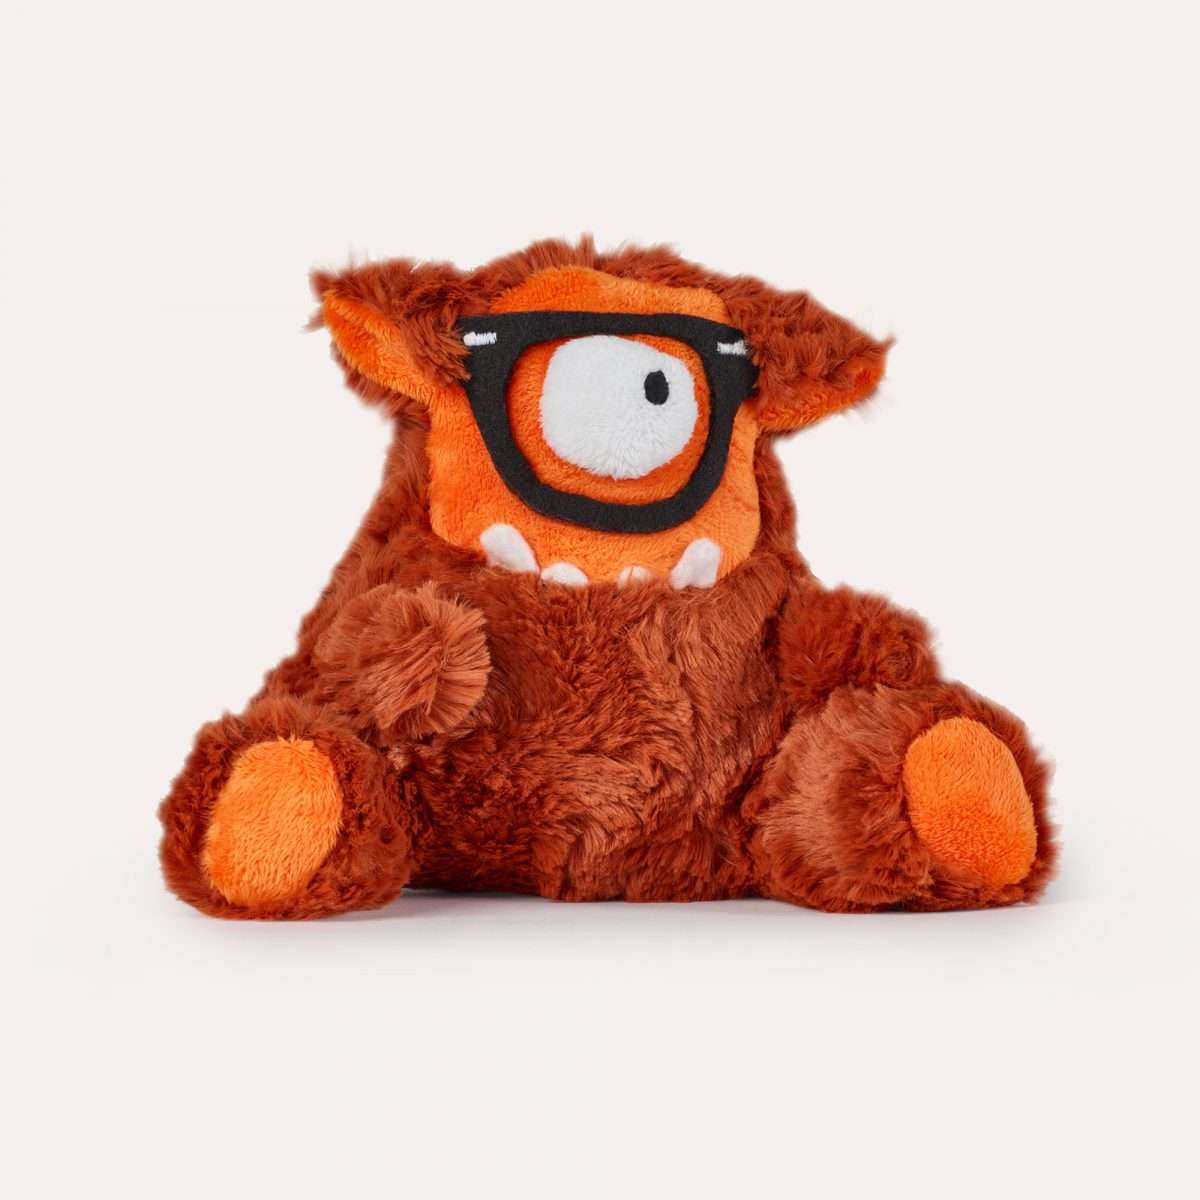 Creachums Wallis Stuffed Toy Creature Front